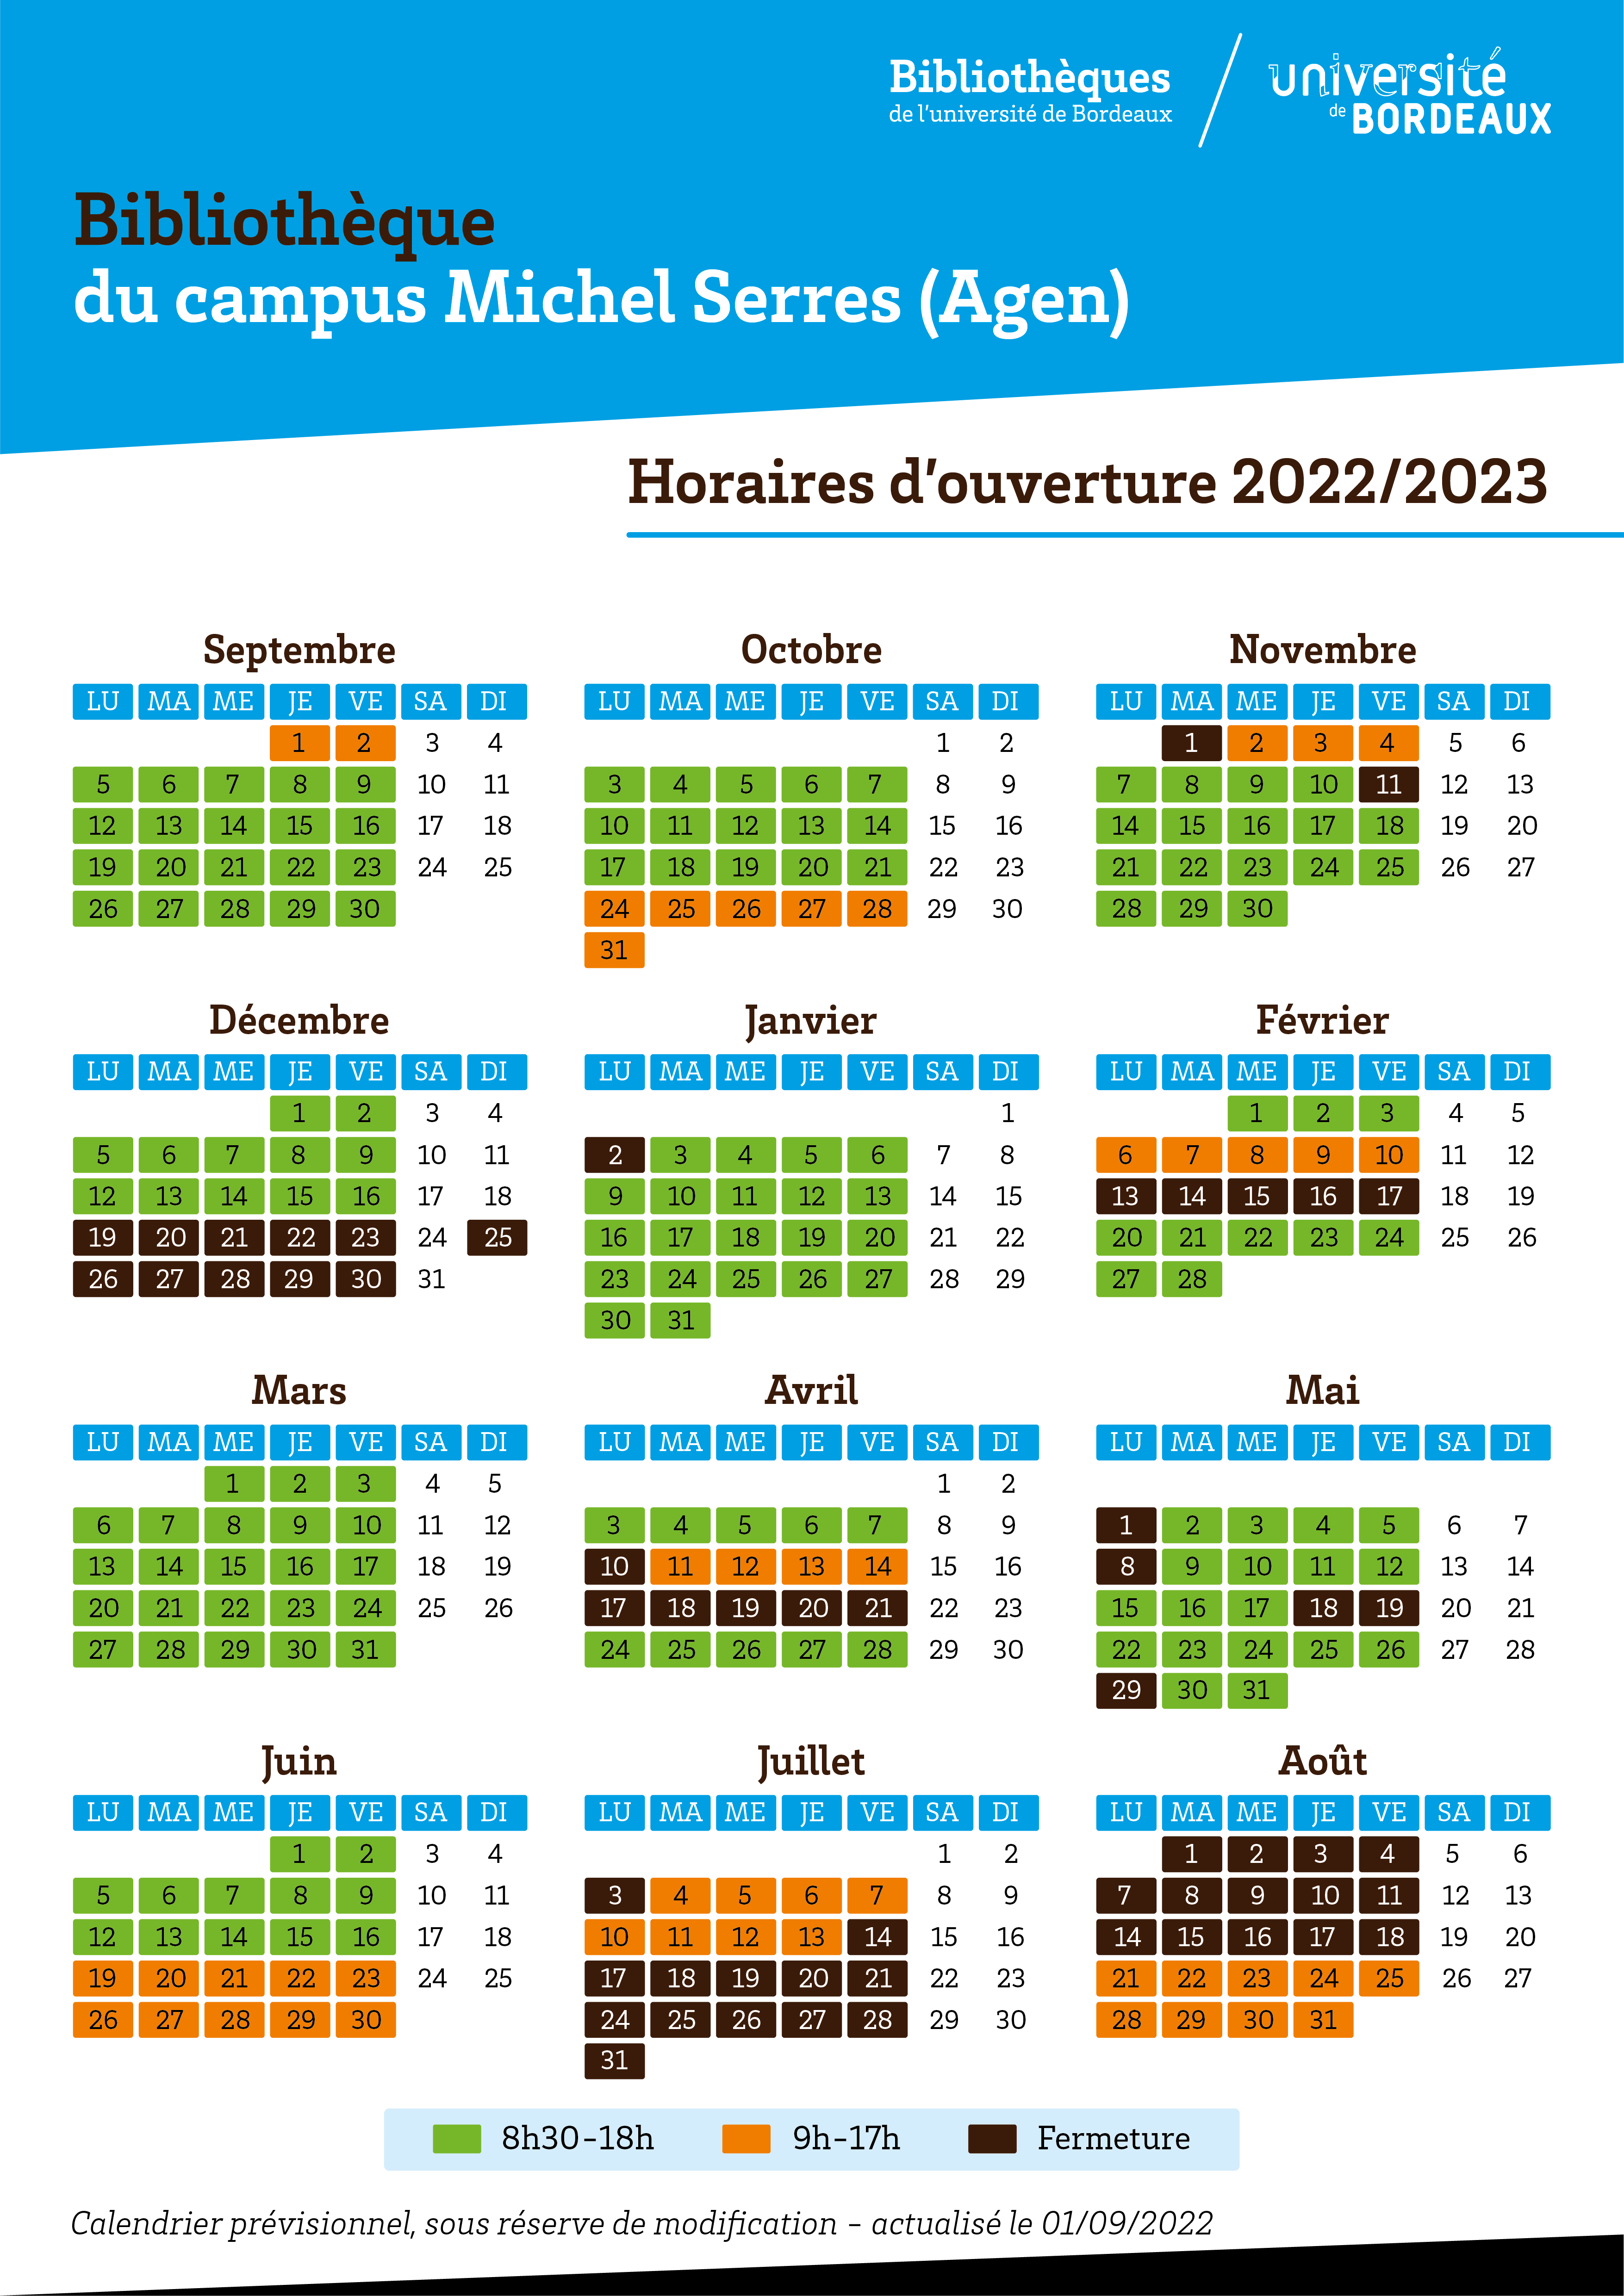 202-2023_horaires-bib-michel-serres(agen)